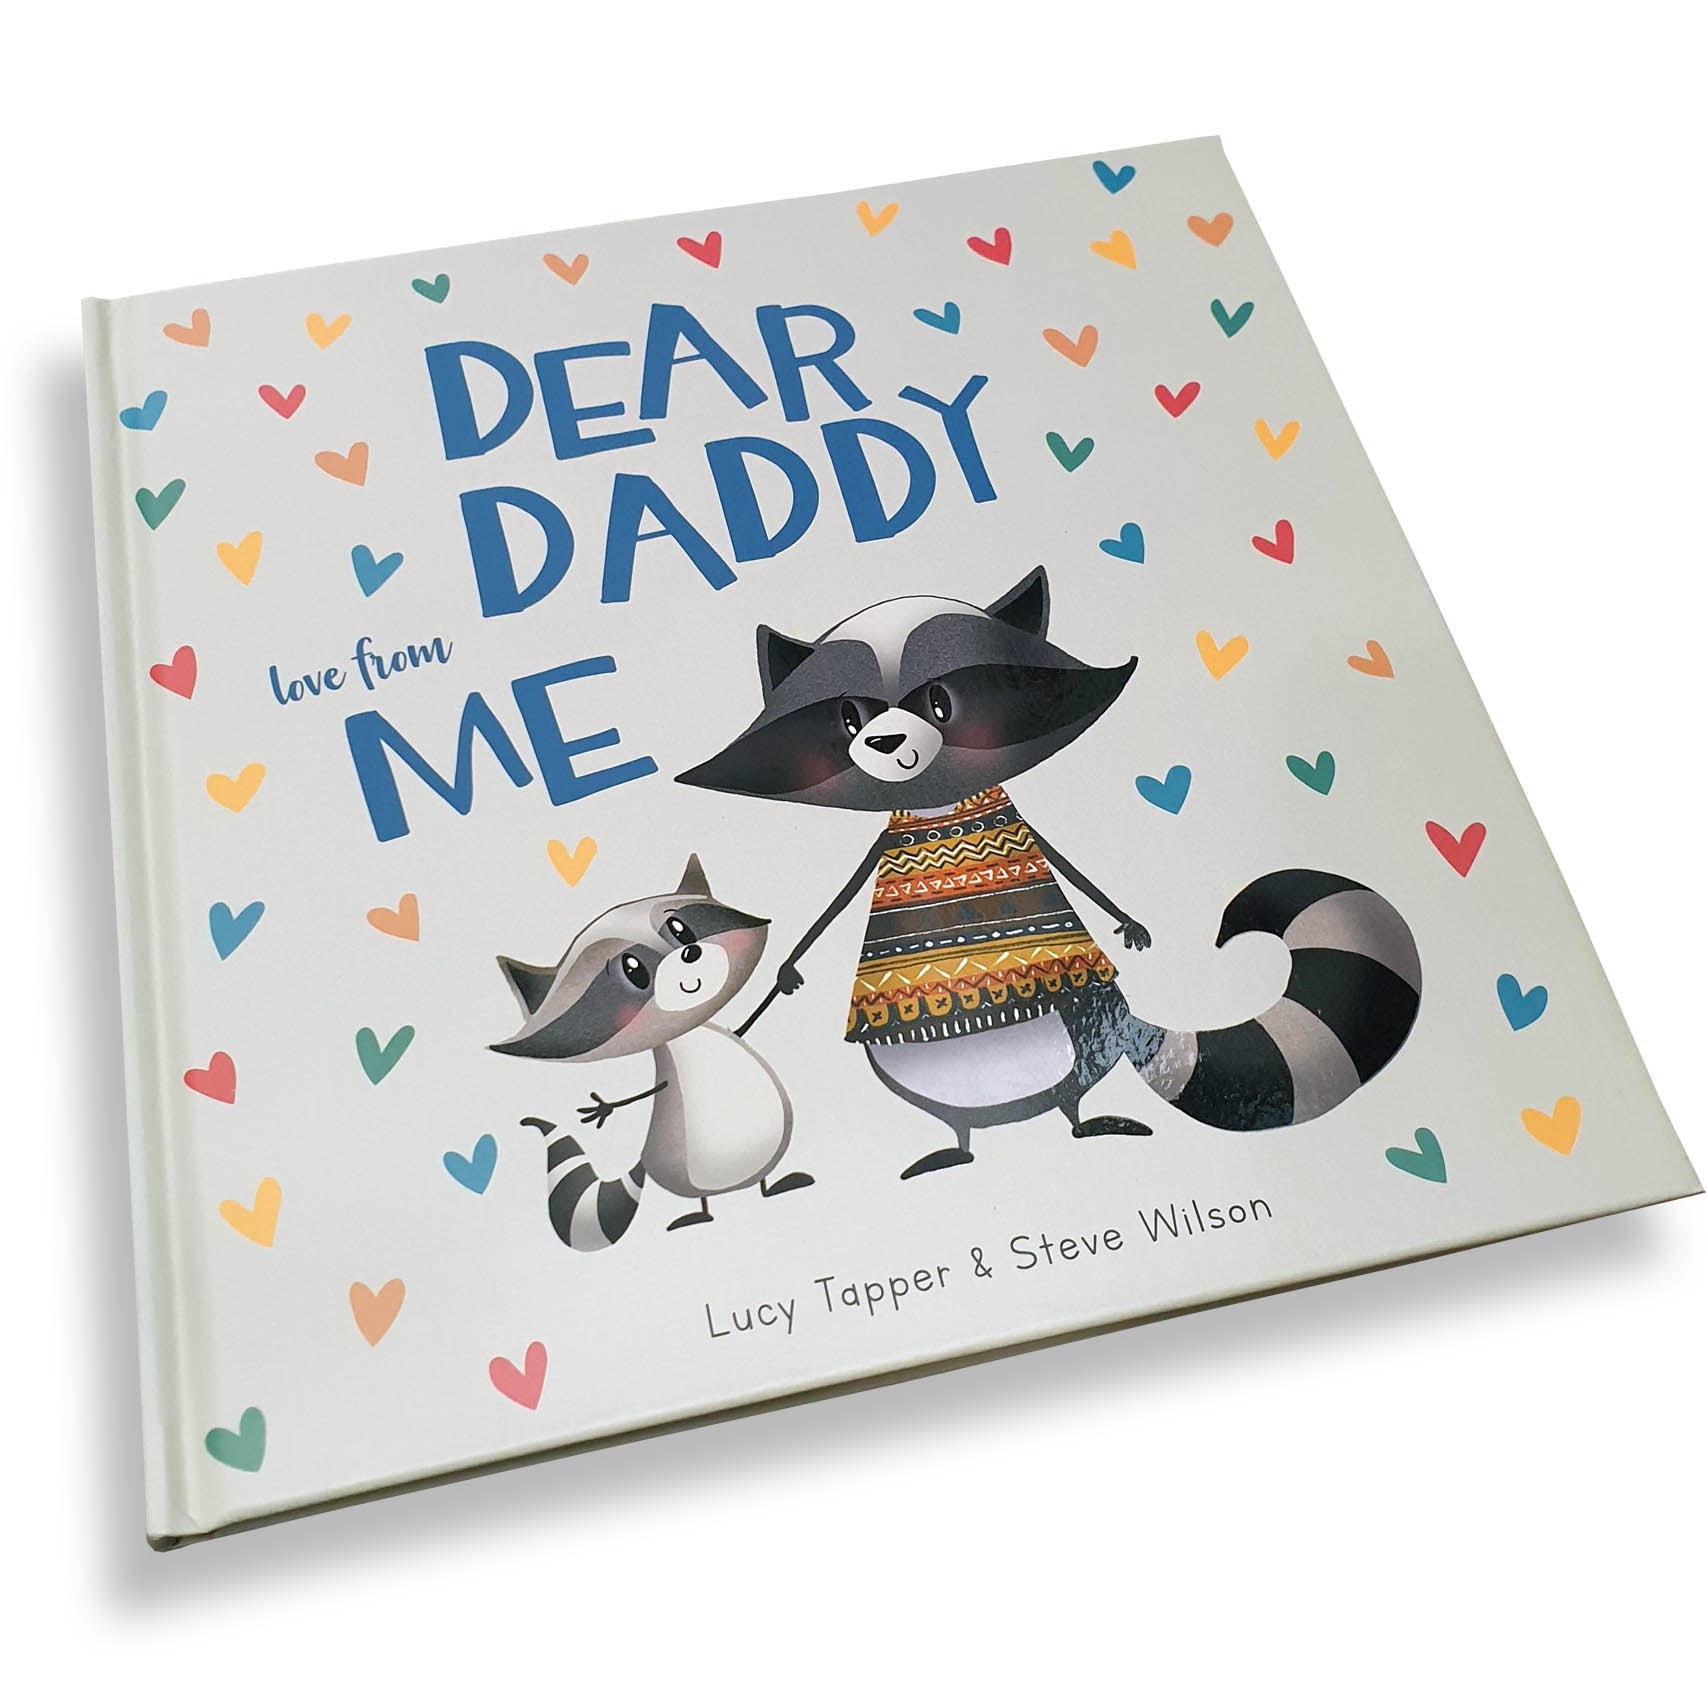 Dear Daddy Love From Me - Deb's Hidden Treasures